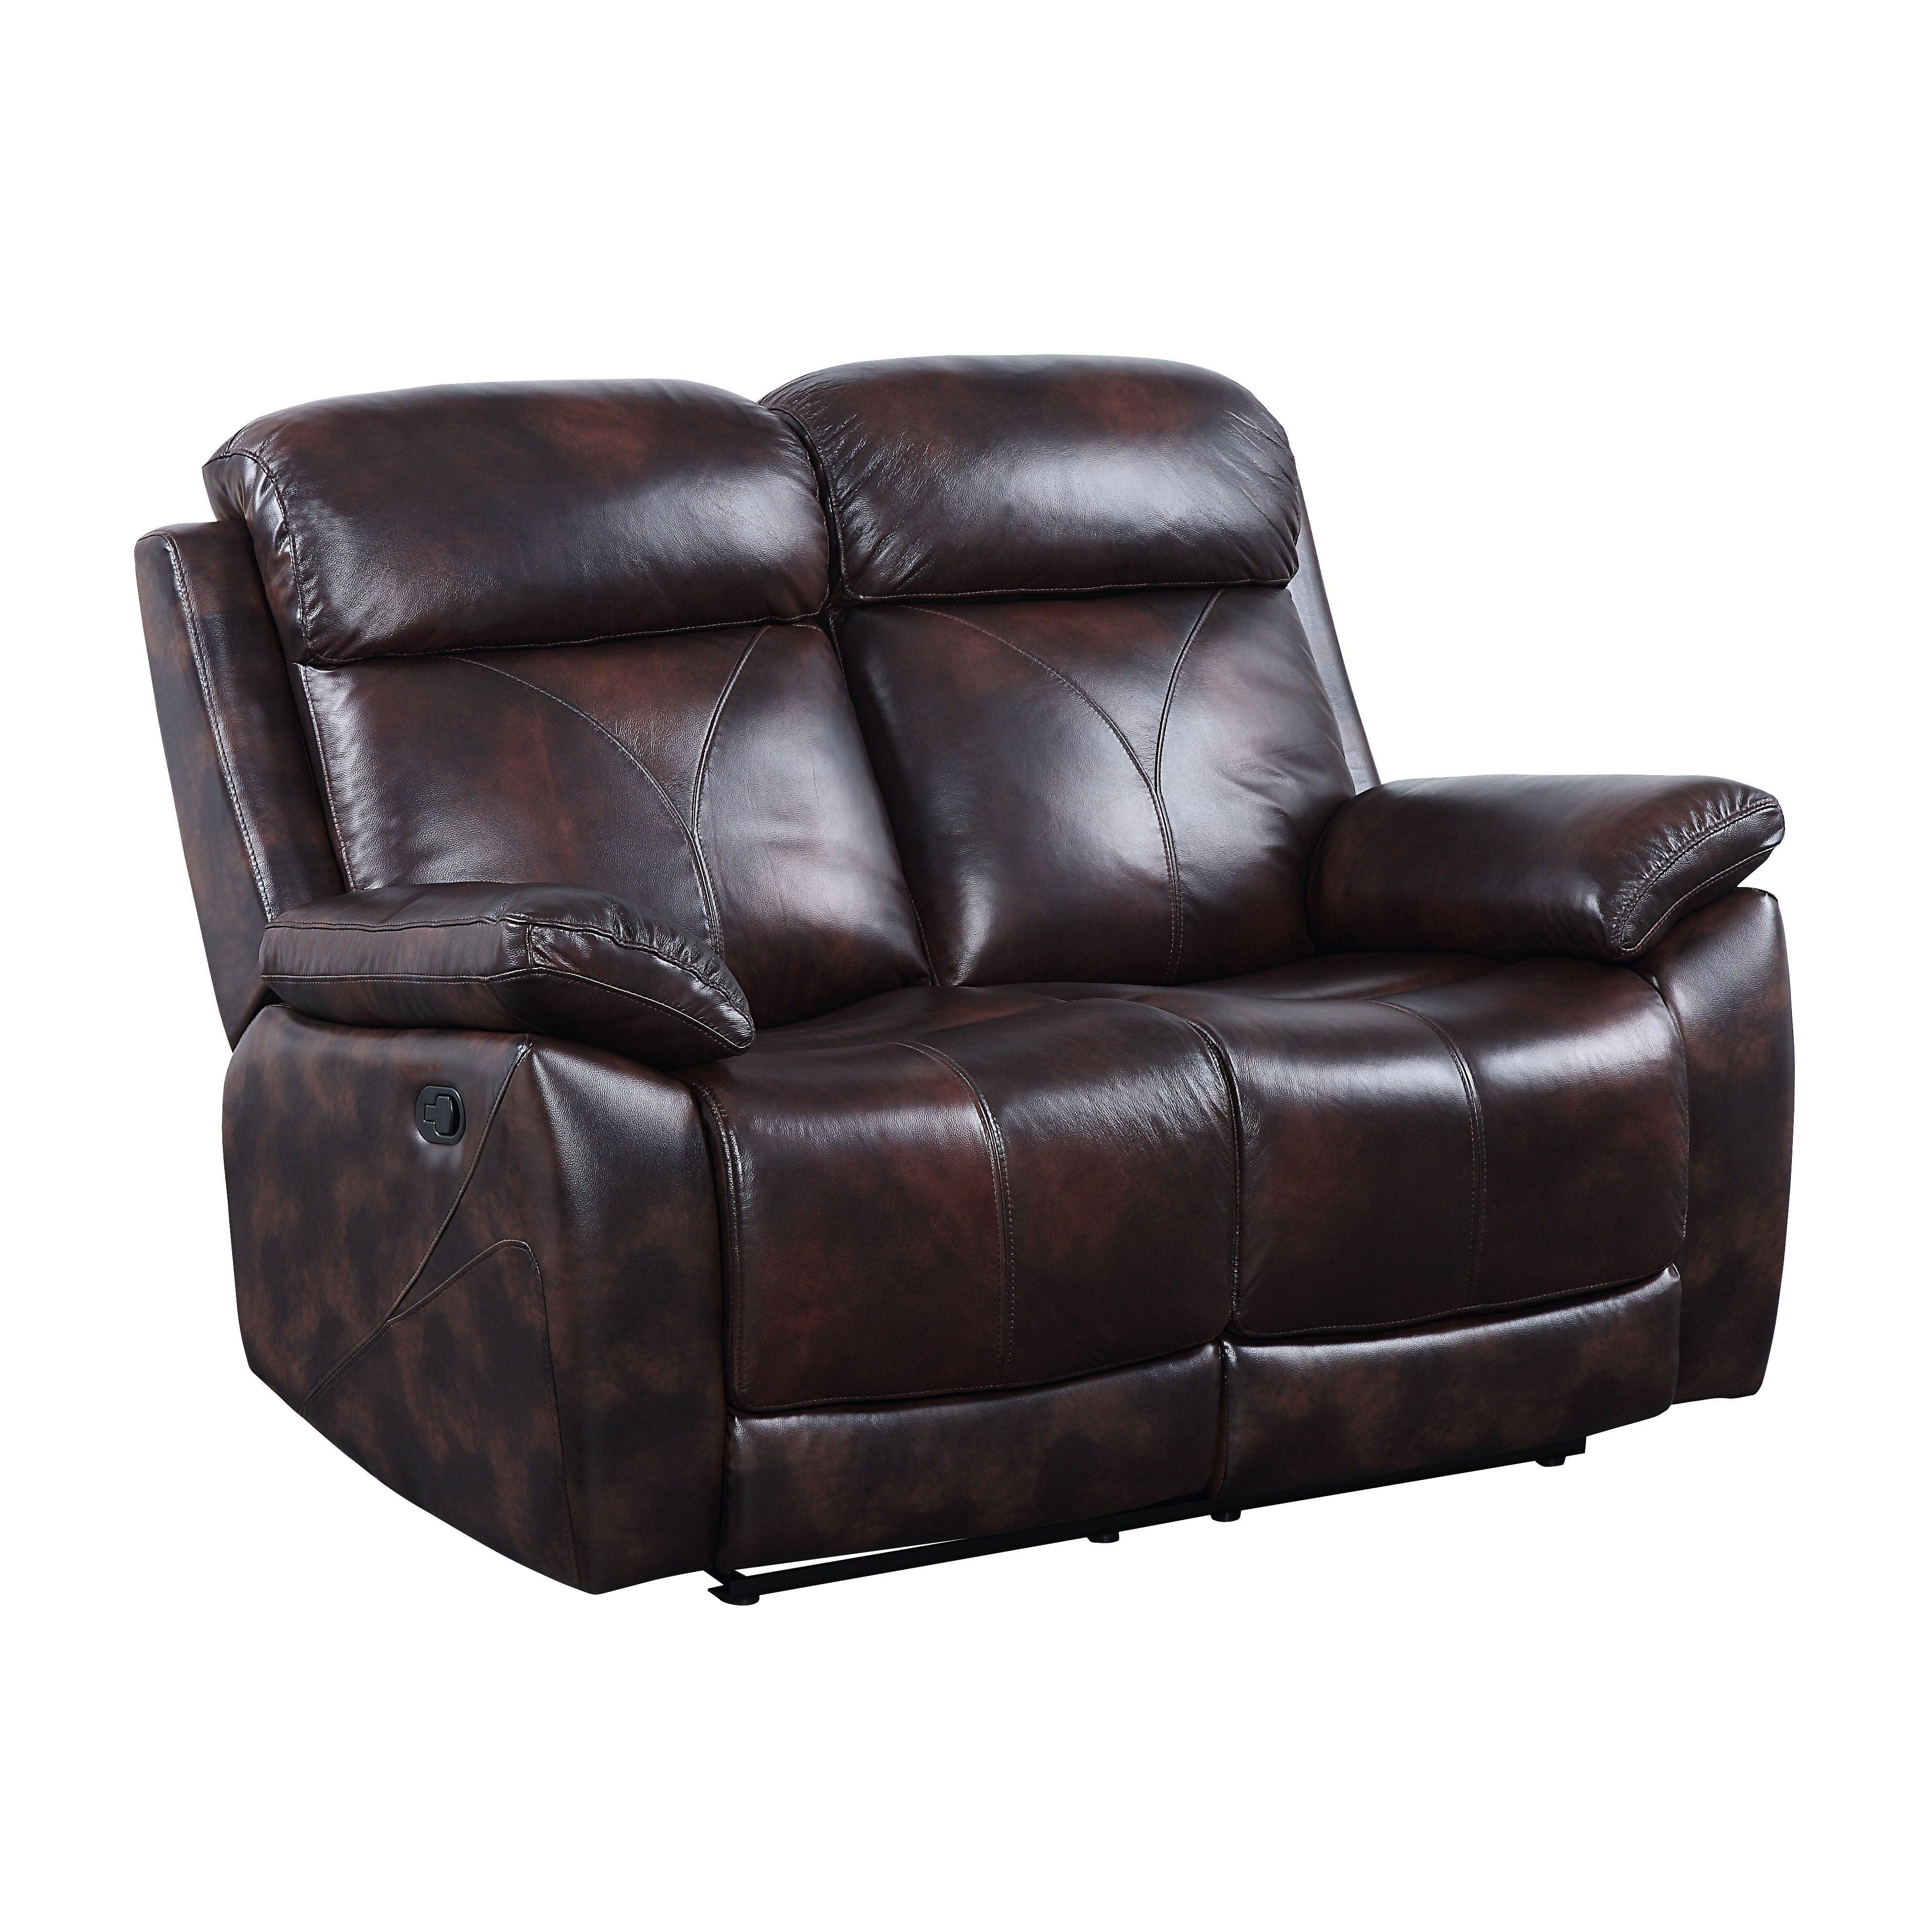 ACME - Perfiel - Loveseat - 2 Tone Dark Brown Top Grain Leather - 5th Avenue Furniture